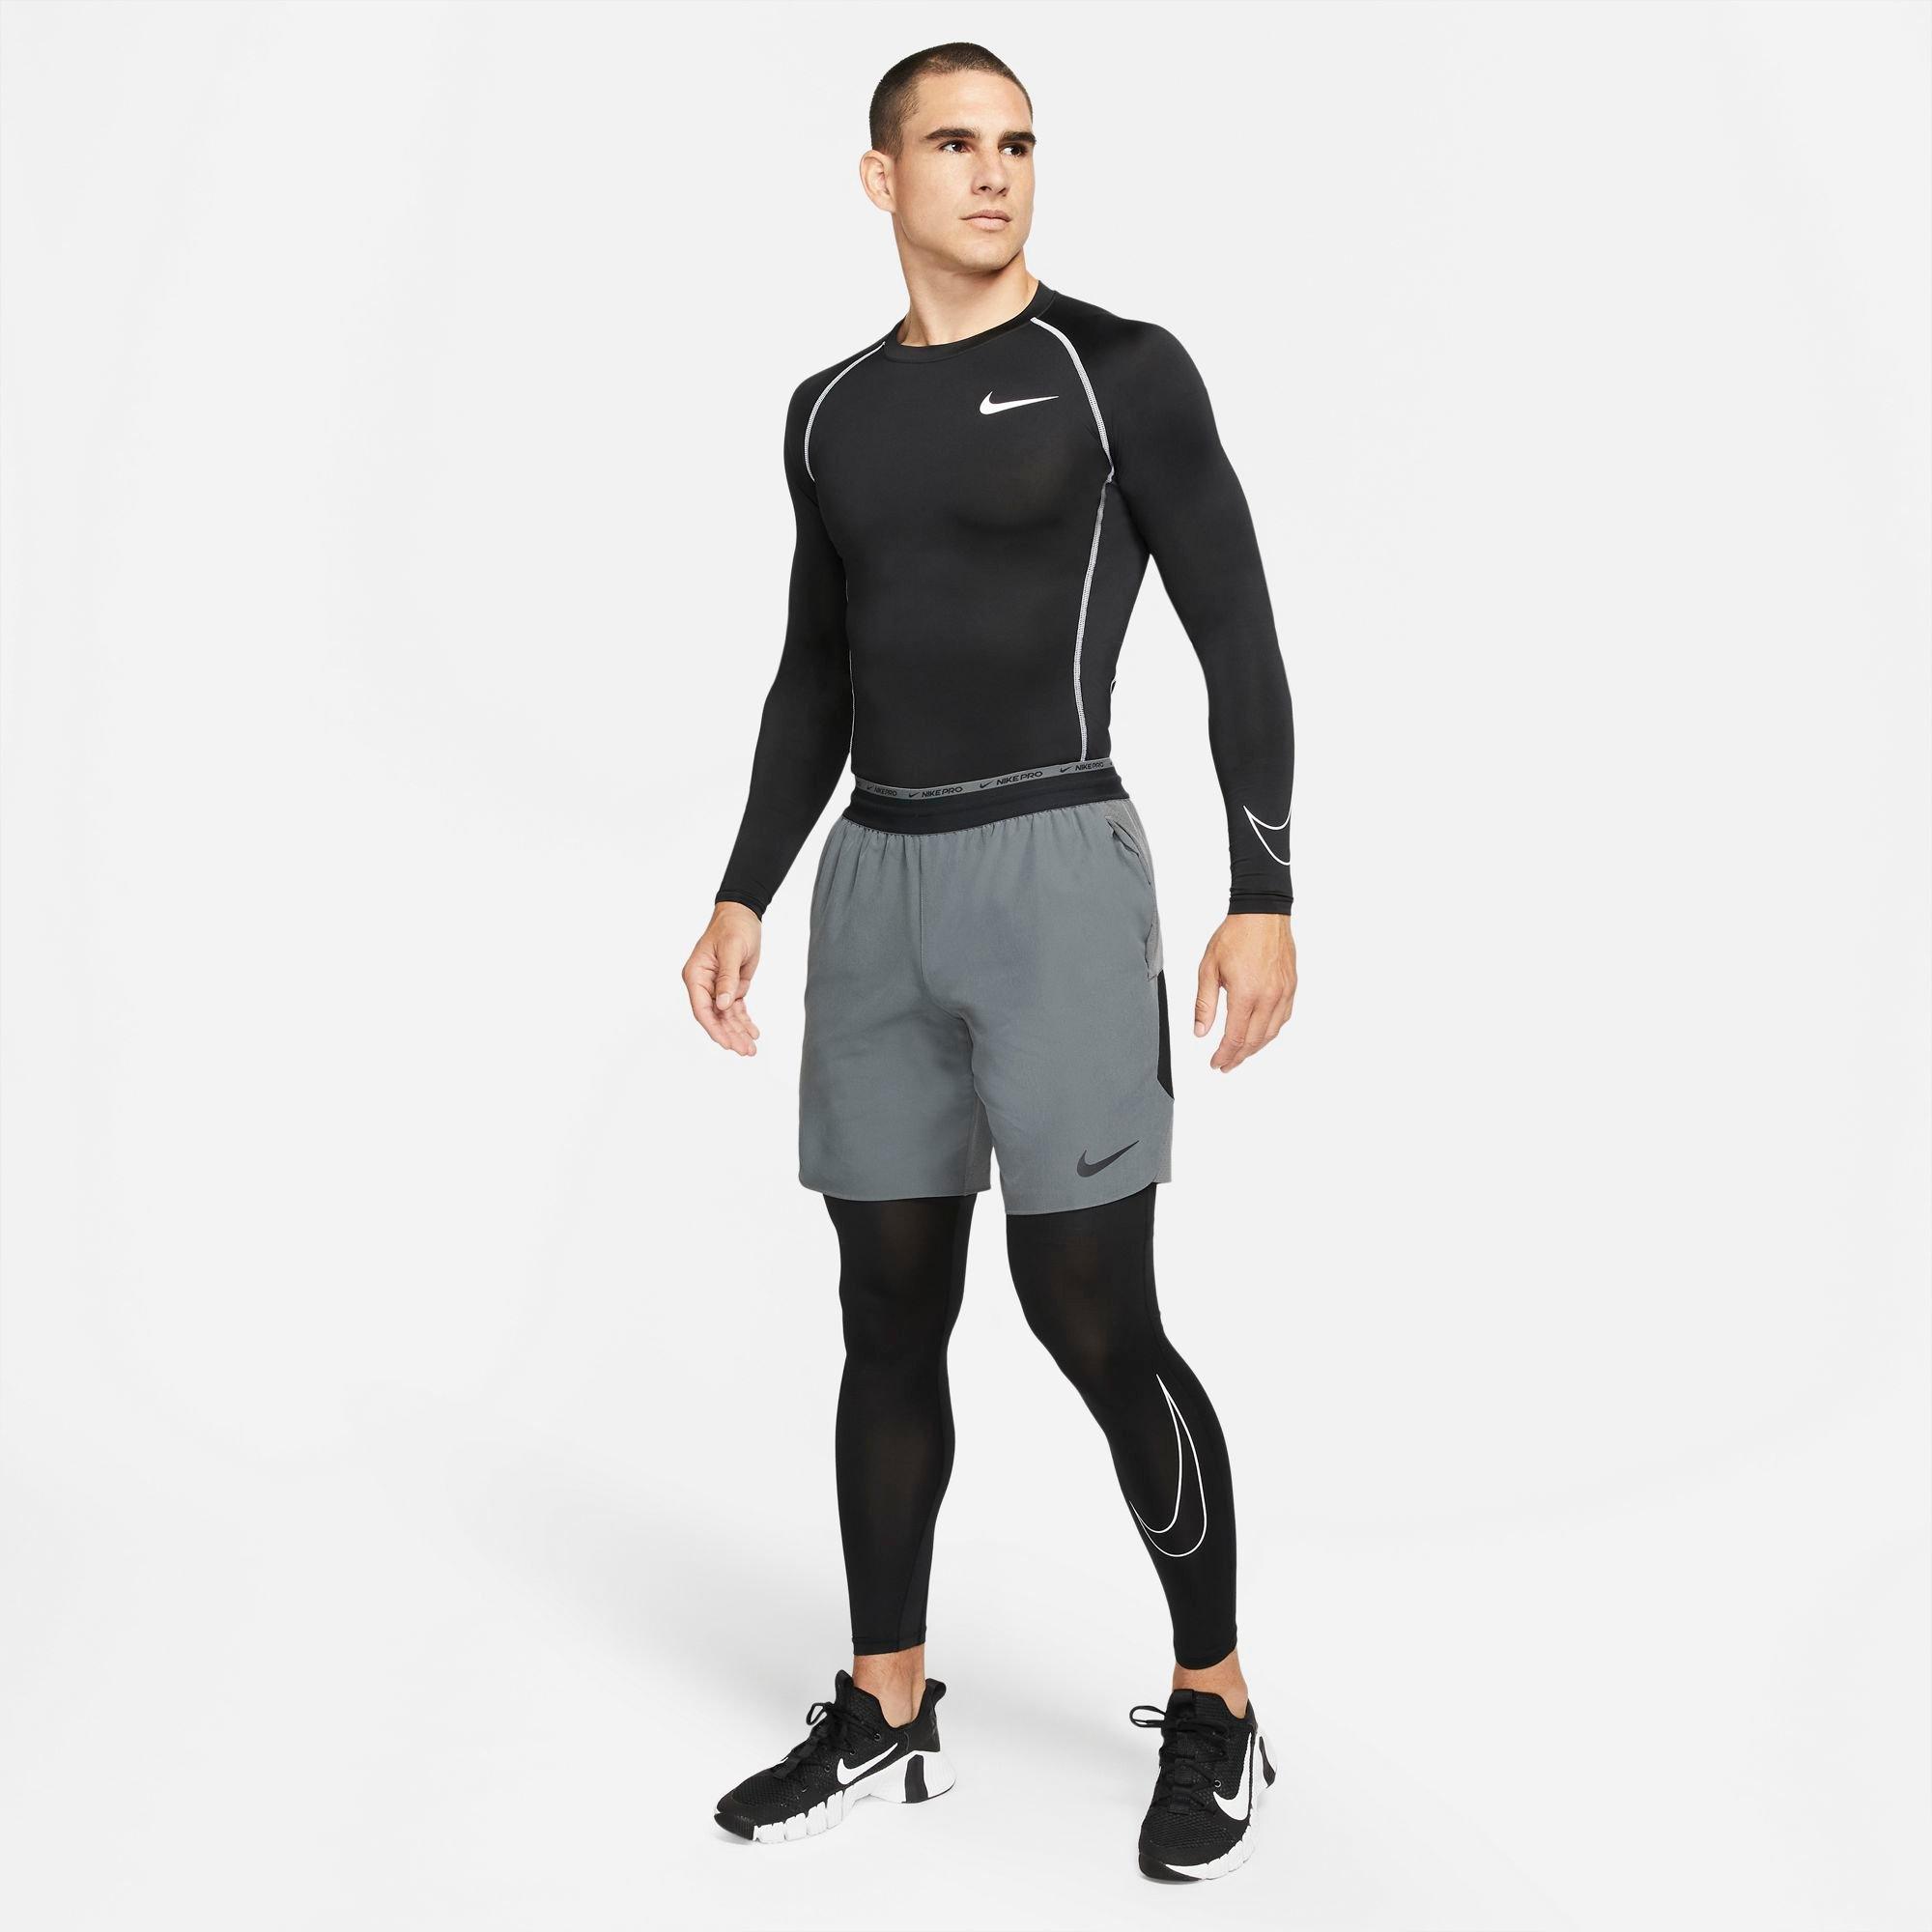 Nike Dri-FIT Compression "Black" Leggings